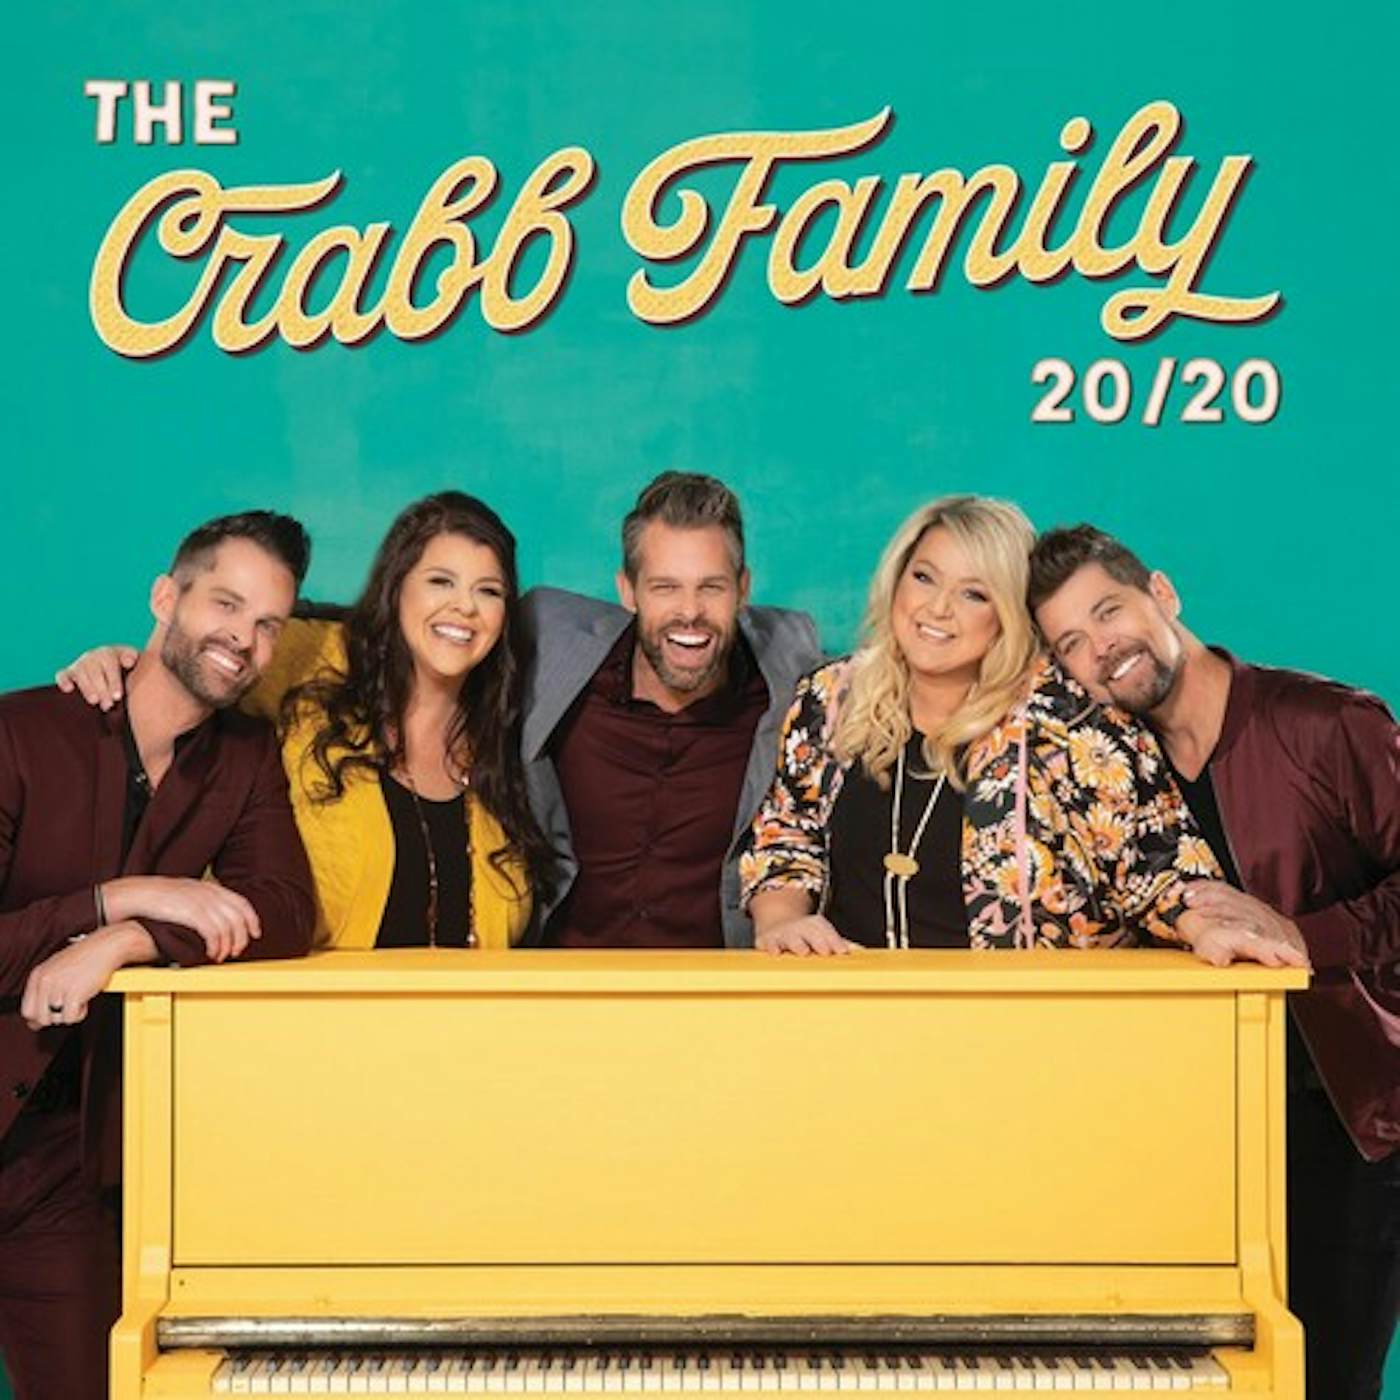 The Crabb Family 20/20 Vinyl Record